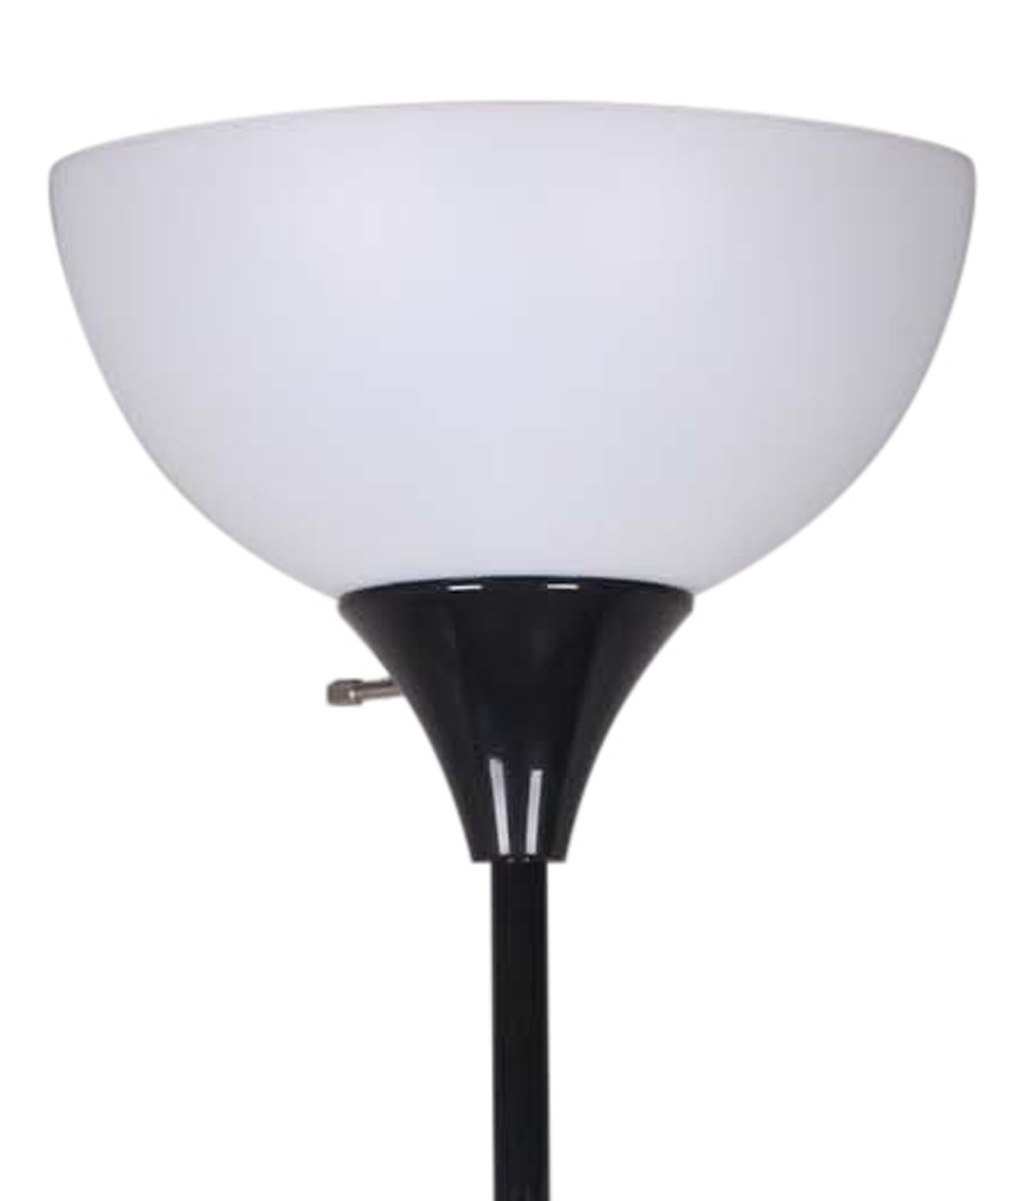 Mainstays 71 Metal Floor Lamp Black, Mainstays Floor Lamp Replacement Plastic Shade